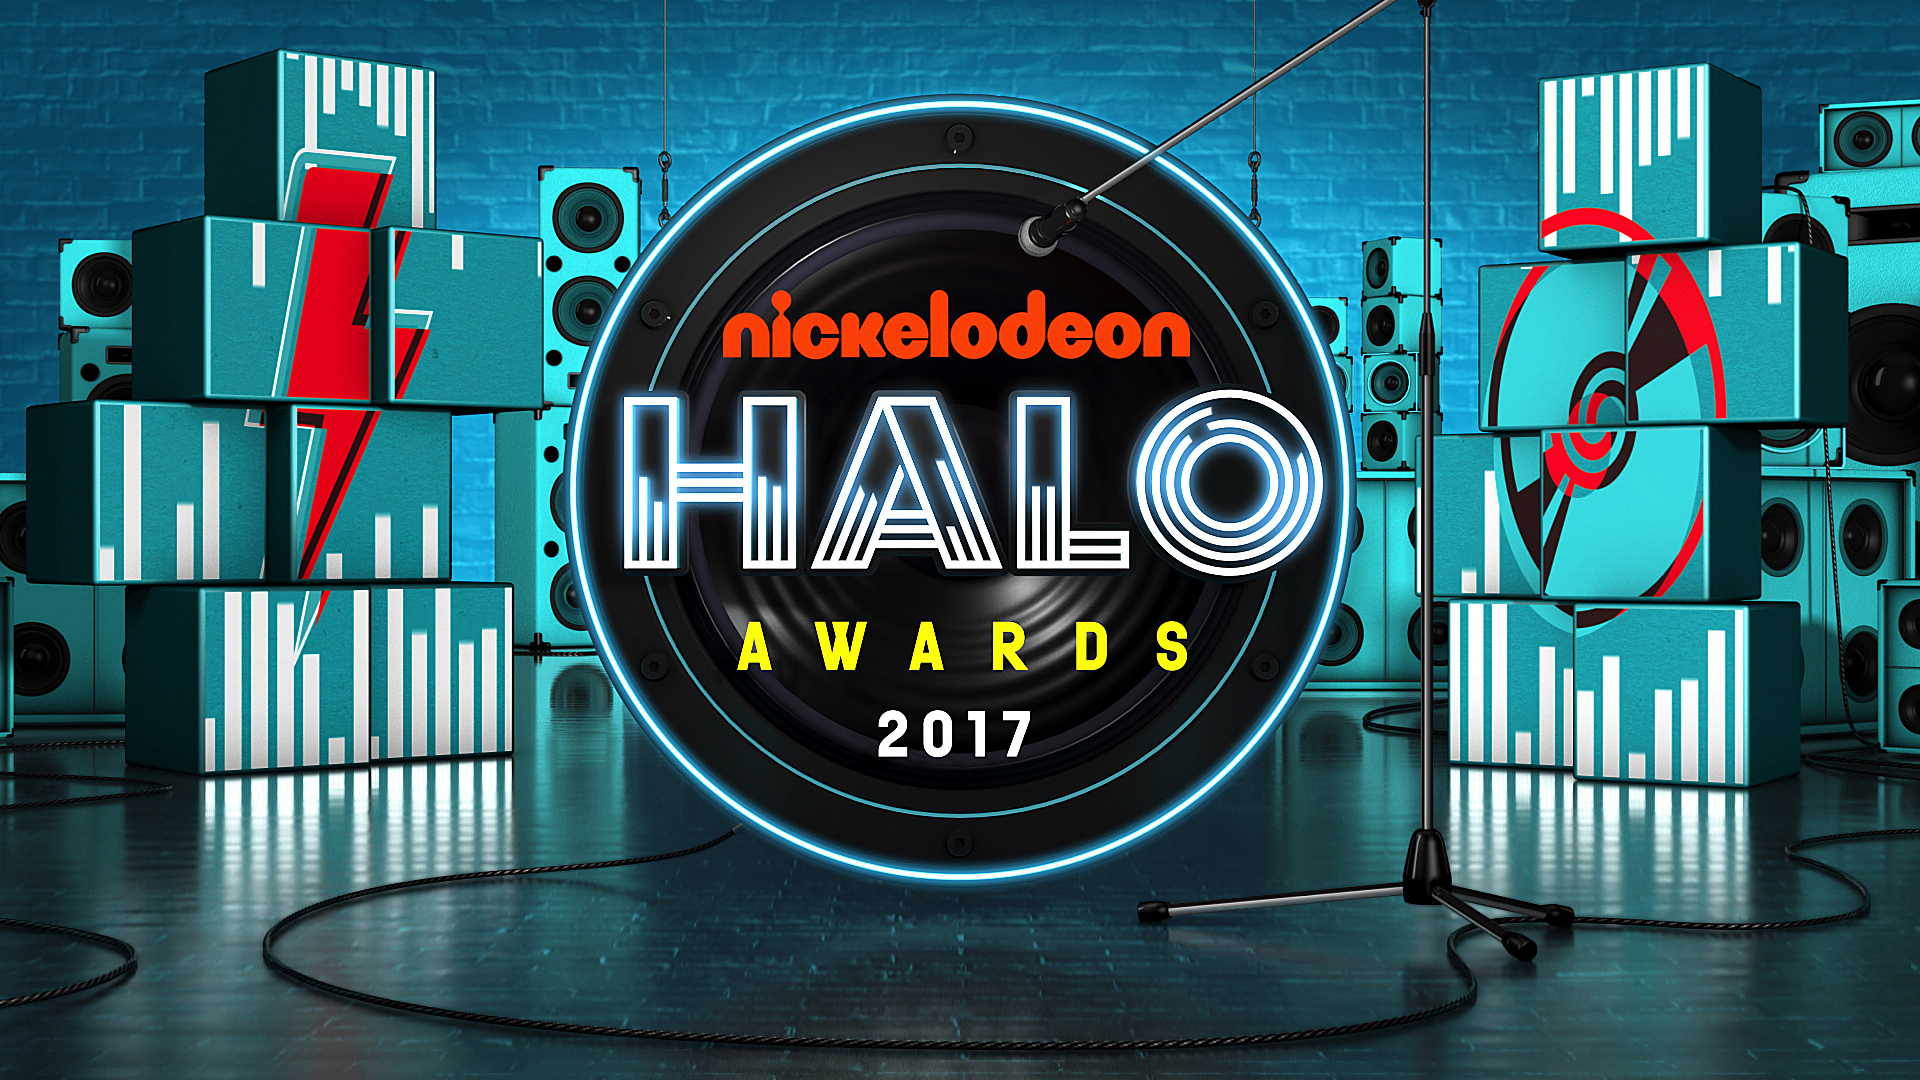 010_Nickelodeon Halo Awards 2017.jpg